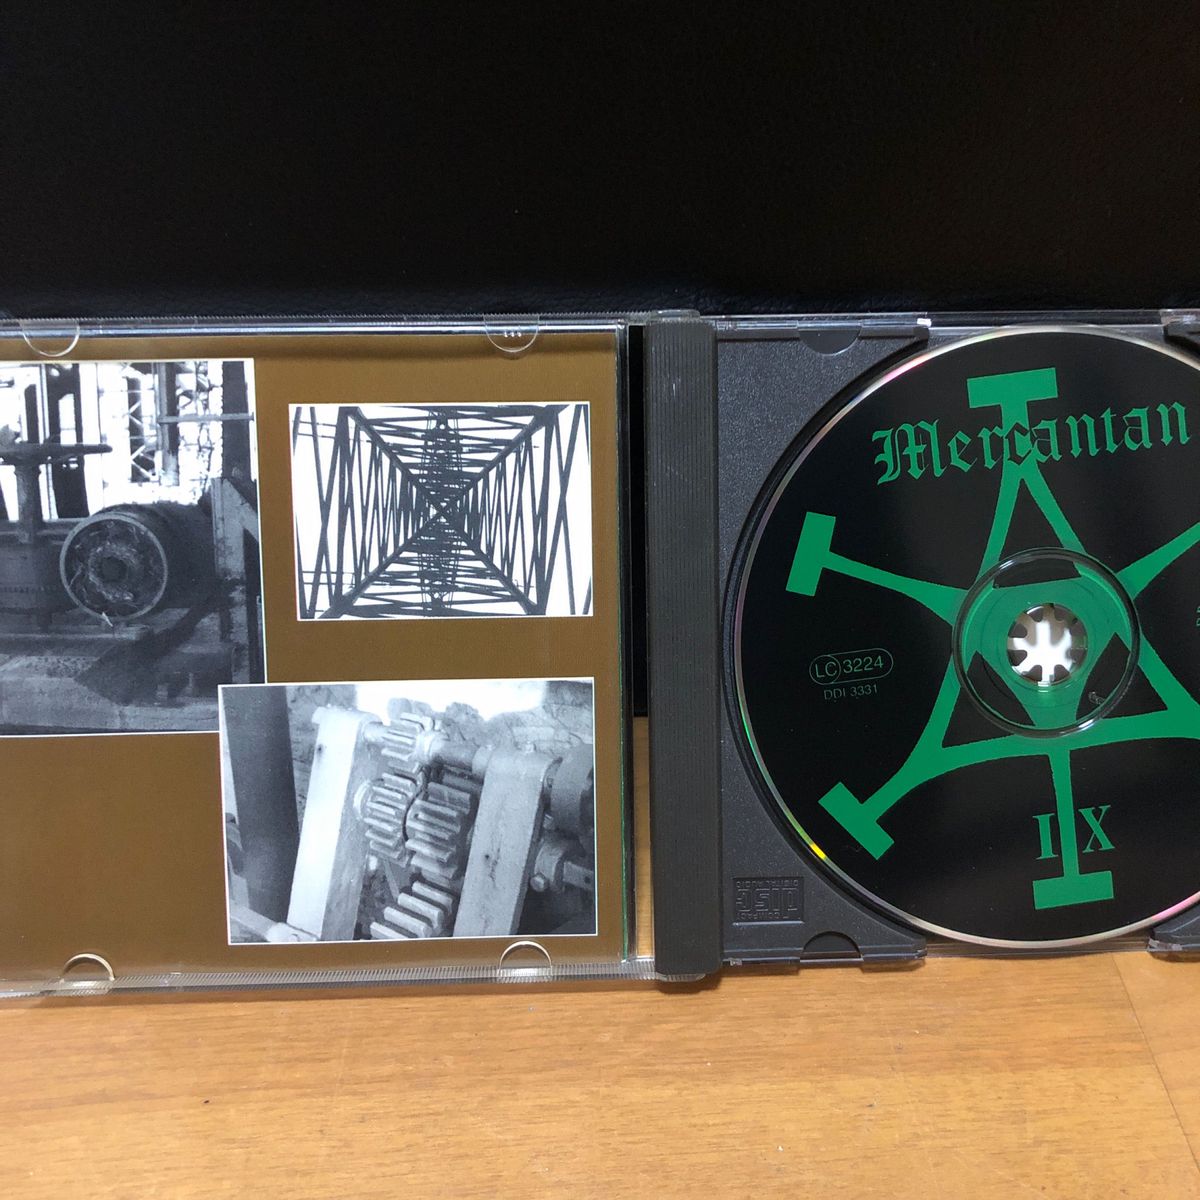 Mercantan / IX  Dark Ambient Industrial 環境音楽　実験音楽